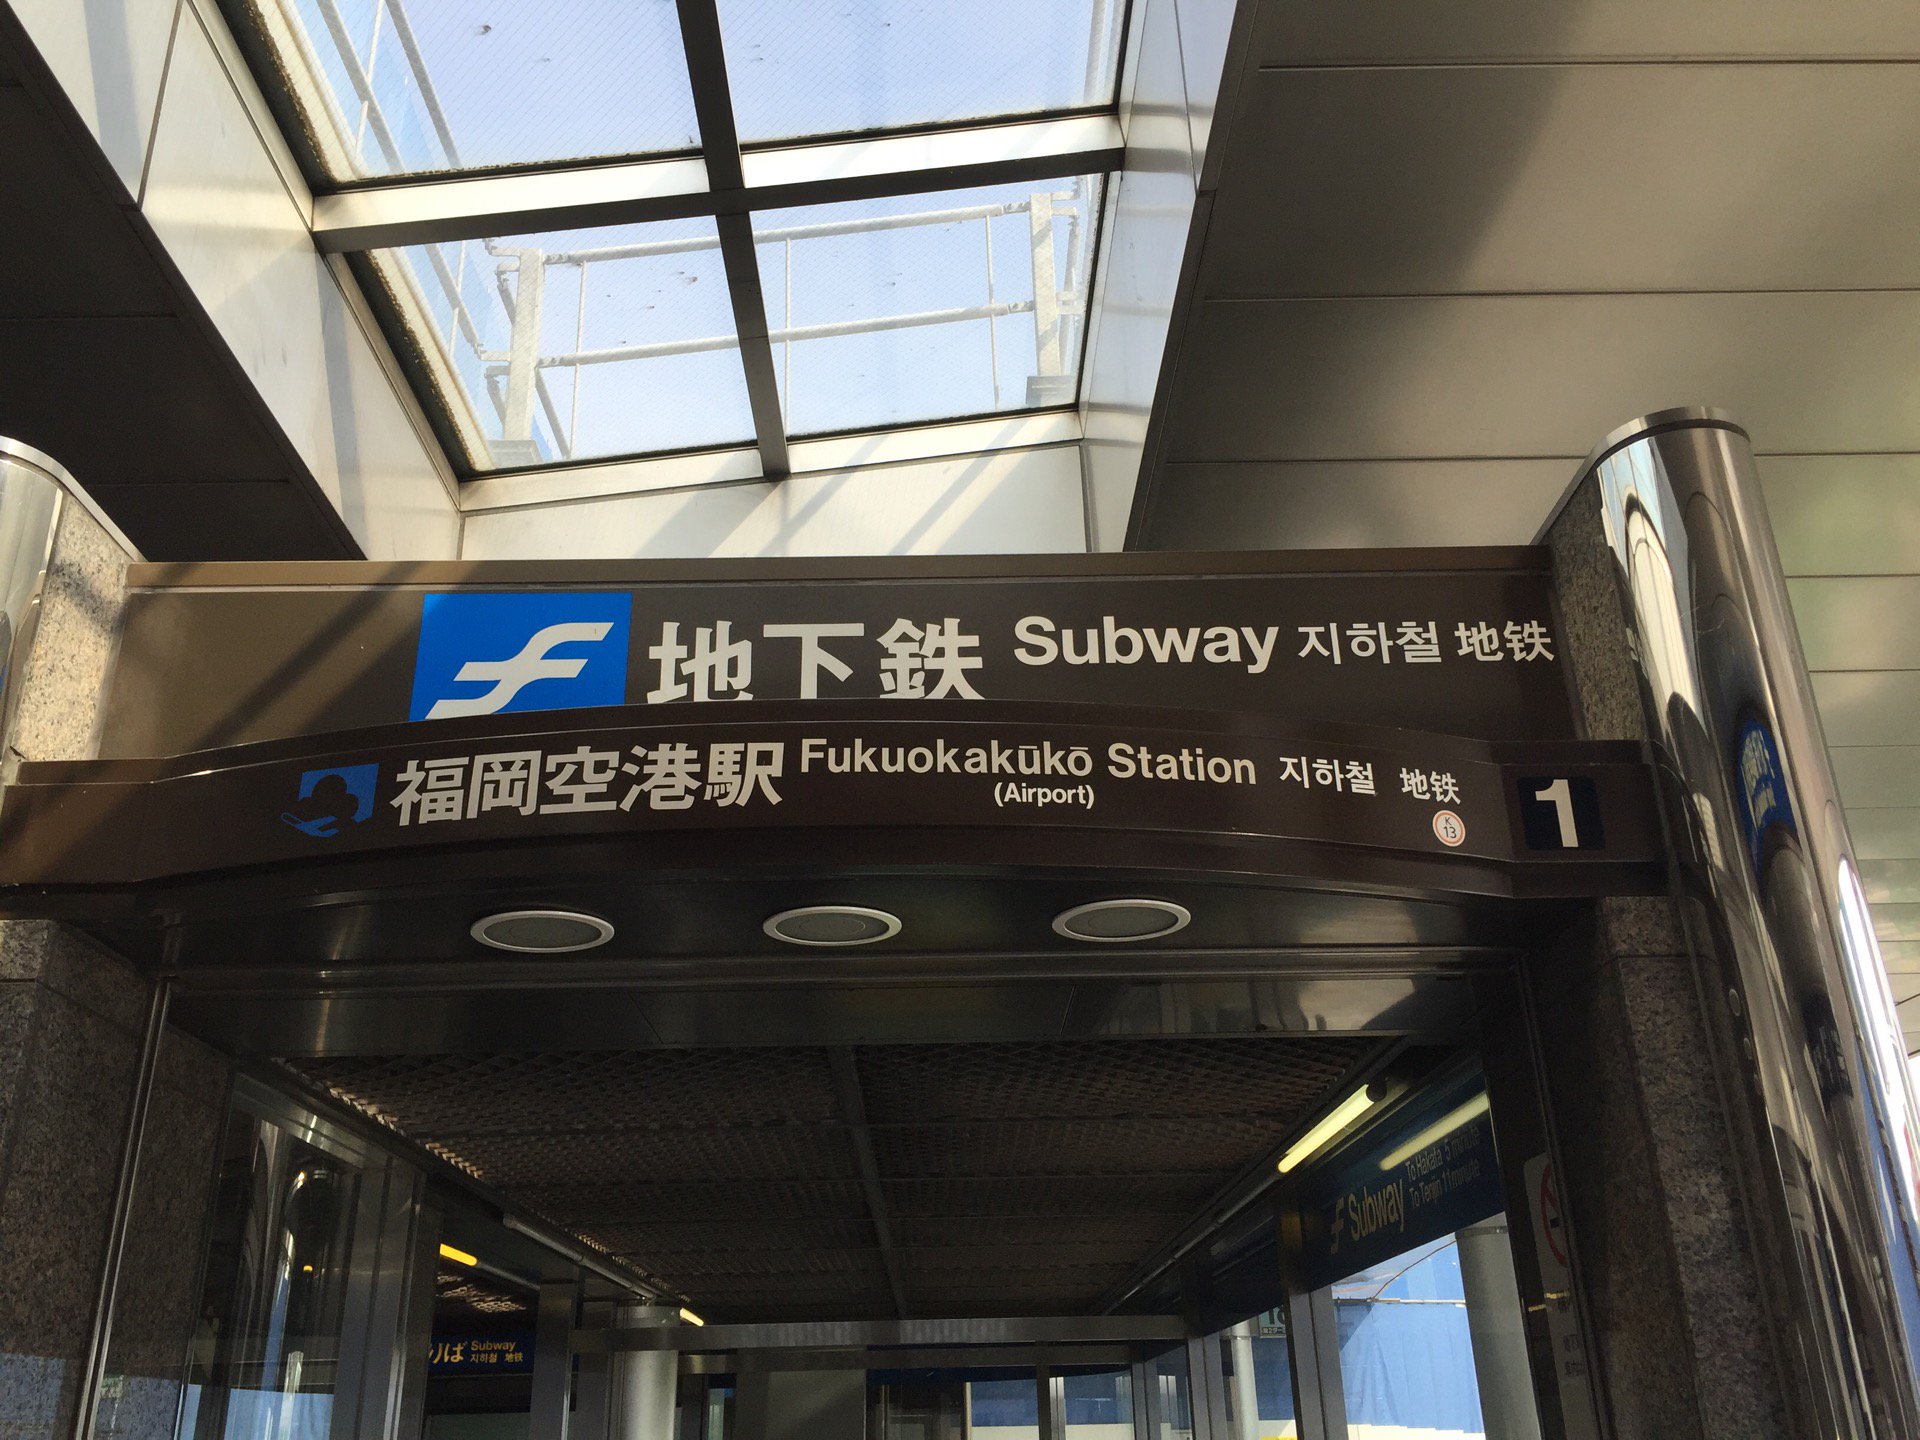 地下鉄。 (@ 福岡空港駅 in Fukuoka, 福岡県) https://t.co/6D78vpGqCX https://t.co/nl3IA25FaA